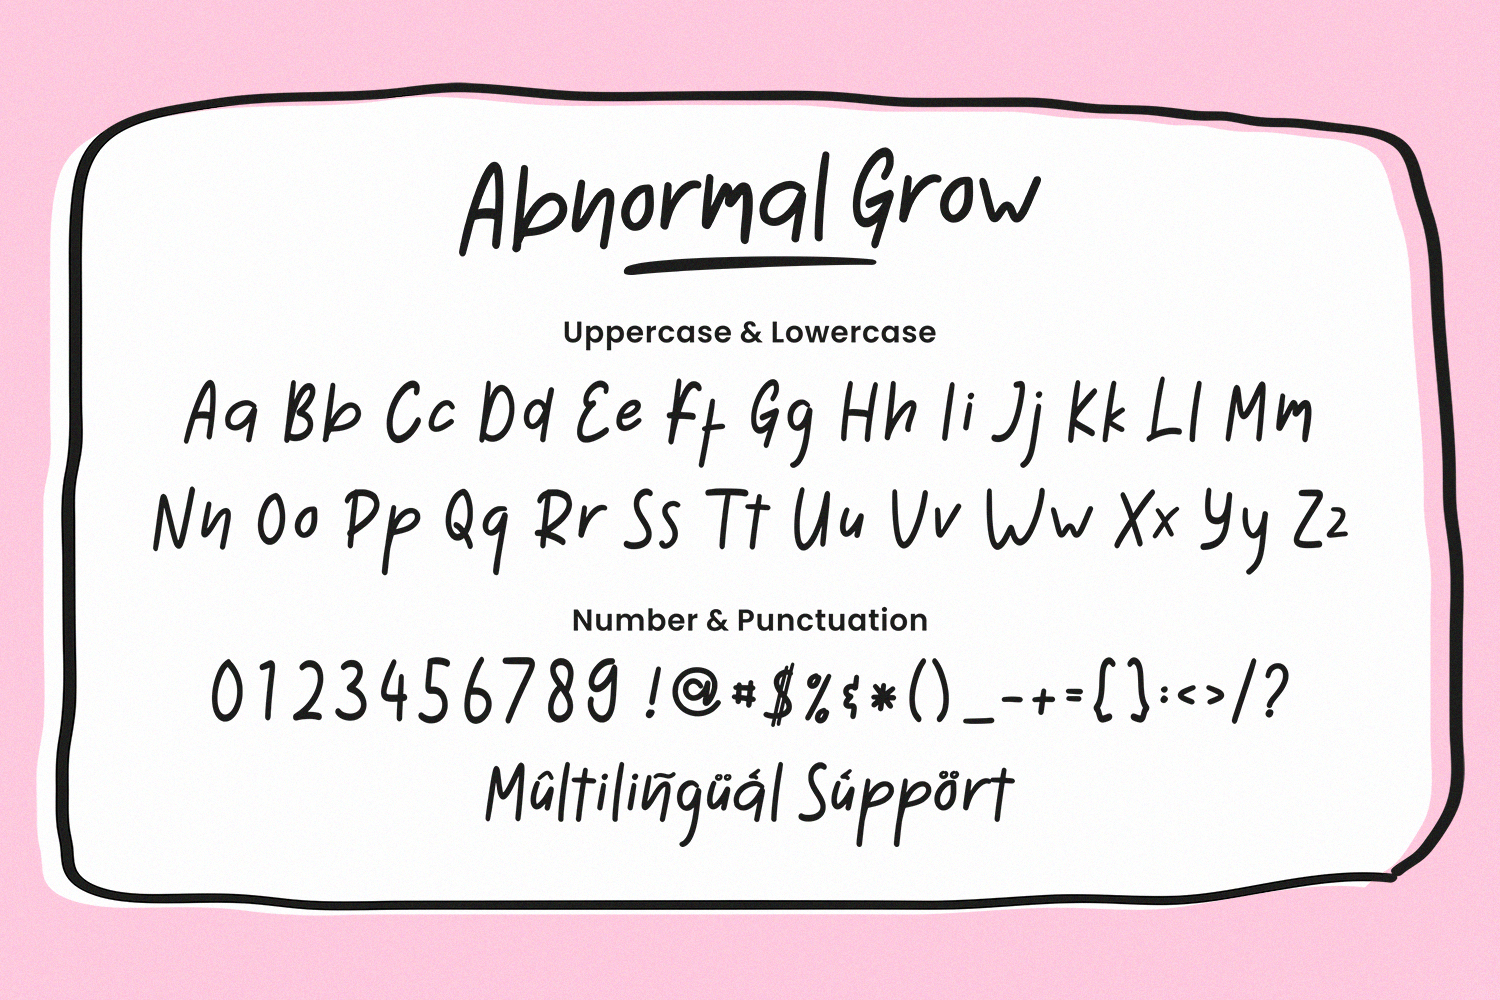 Abnormal Grow